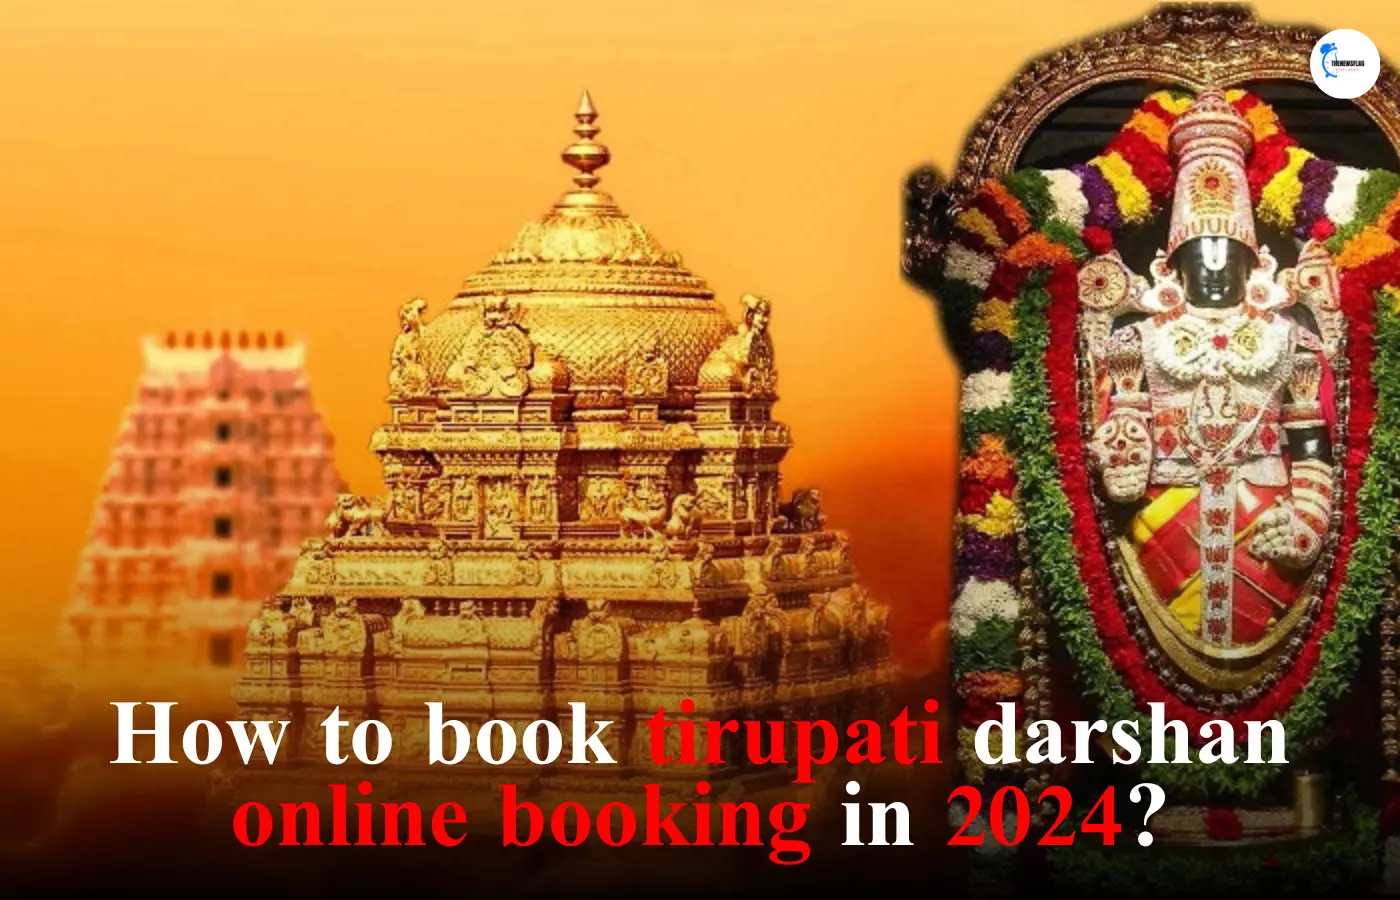 How to book tirupati darshan online booking in 2024?